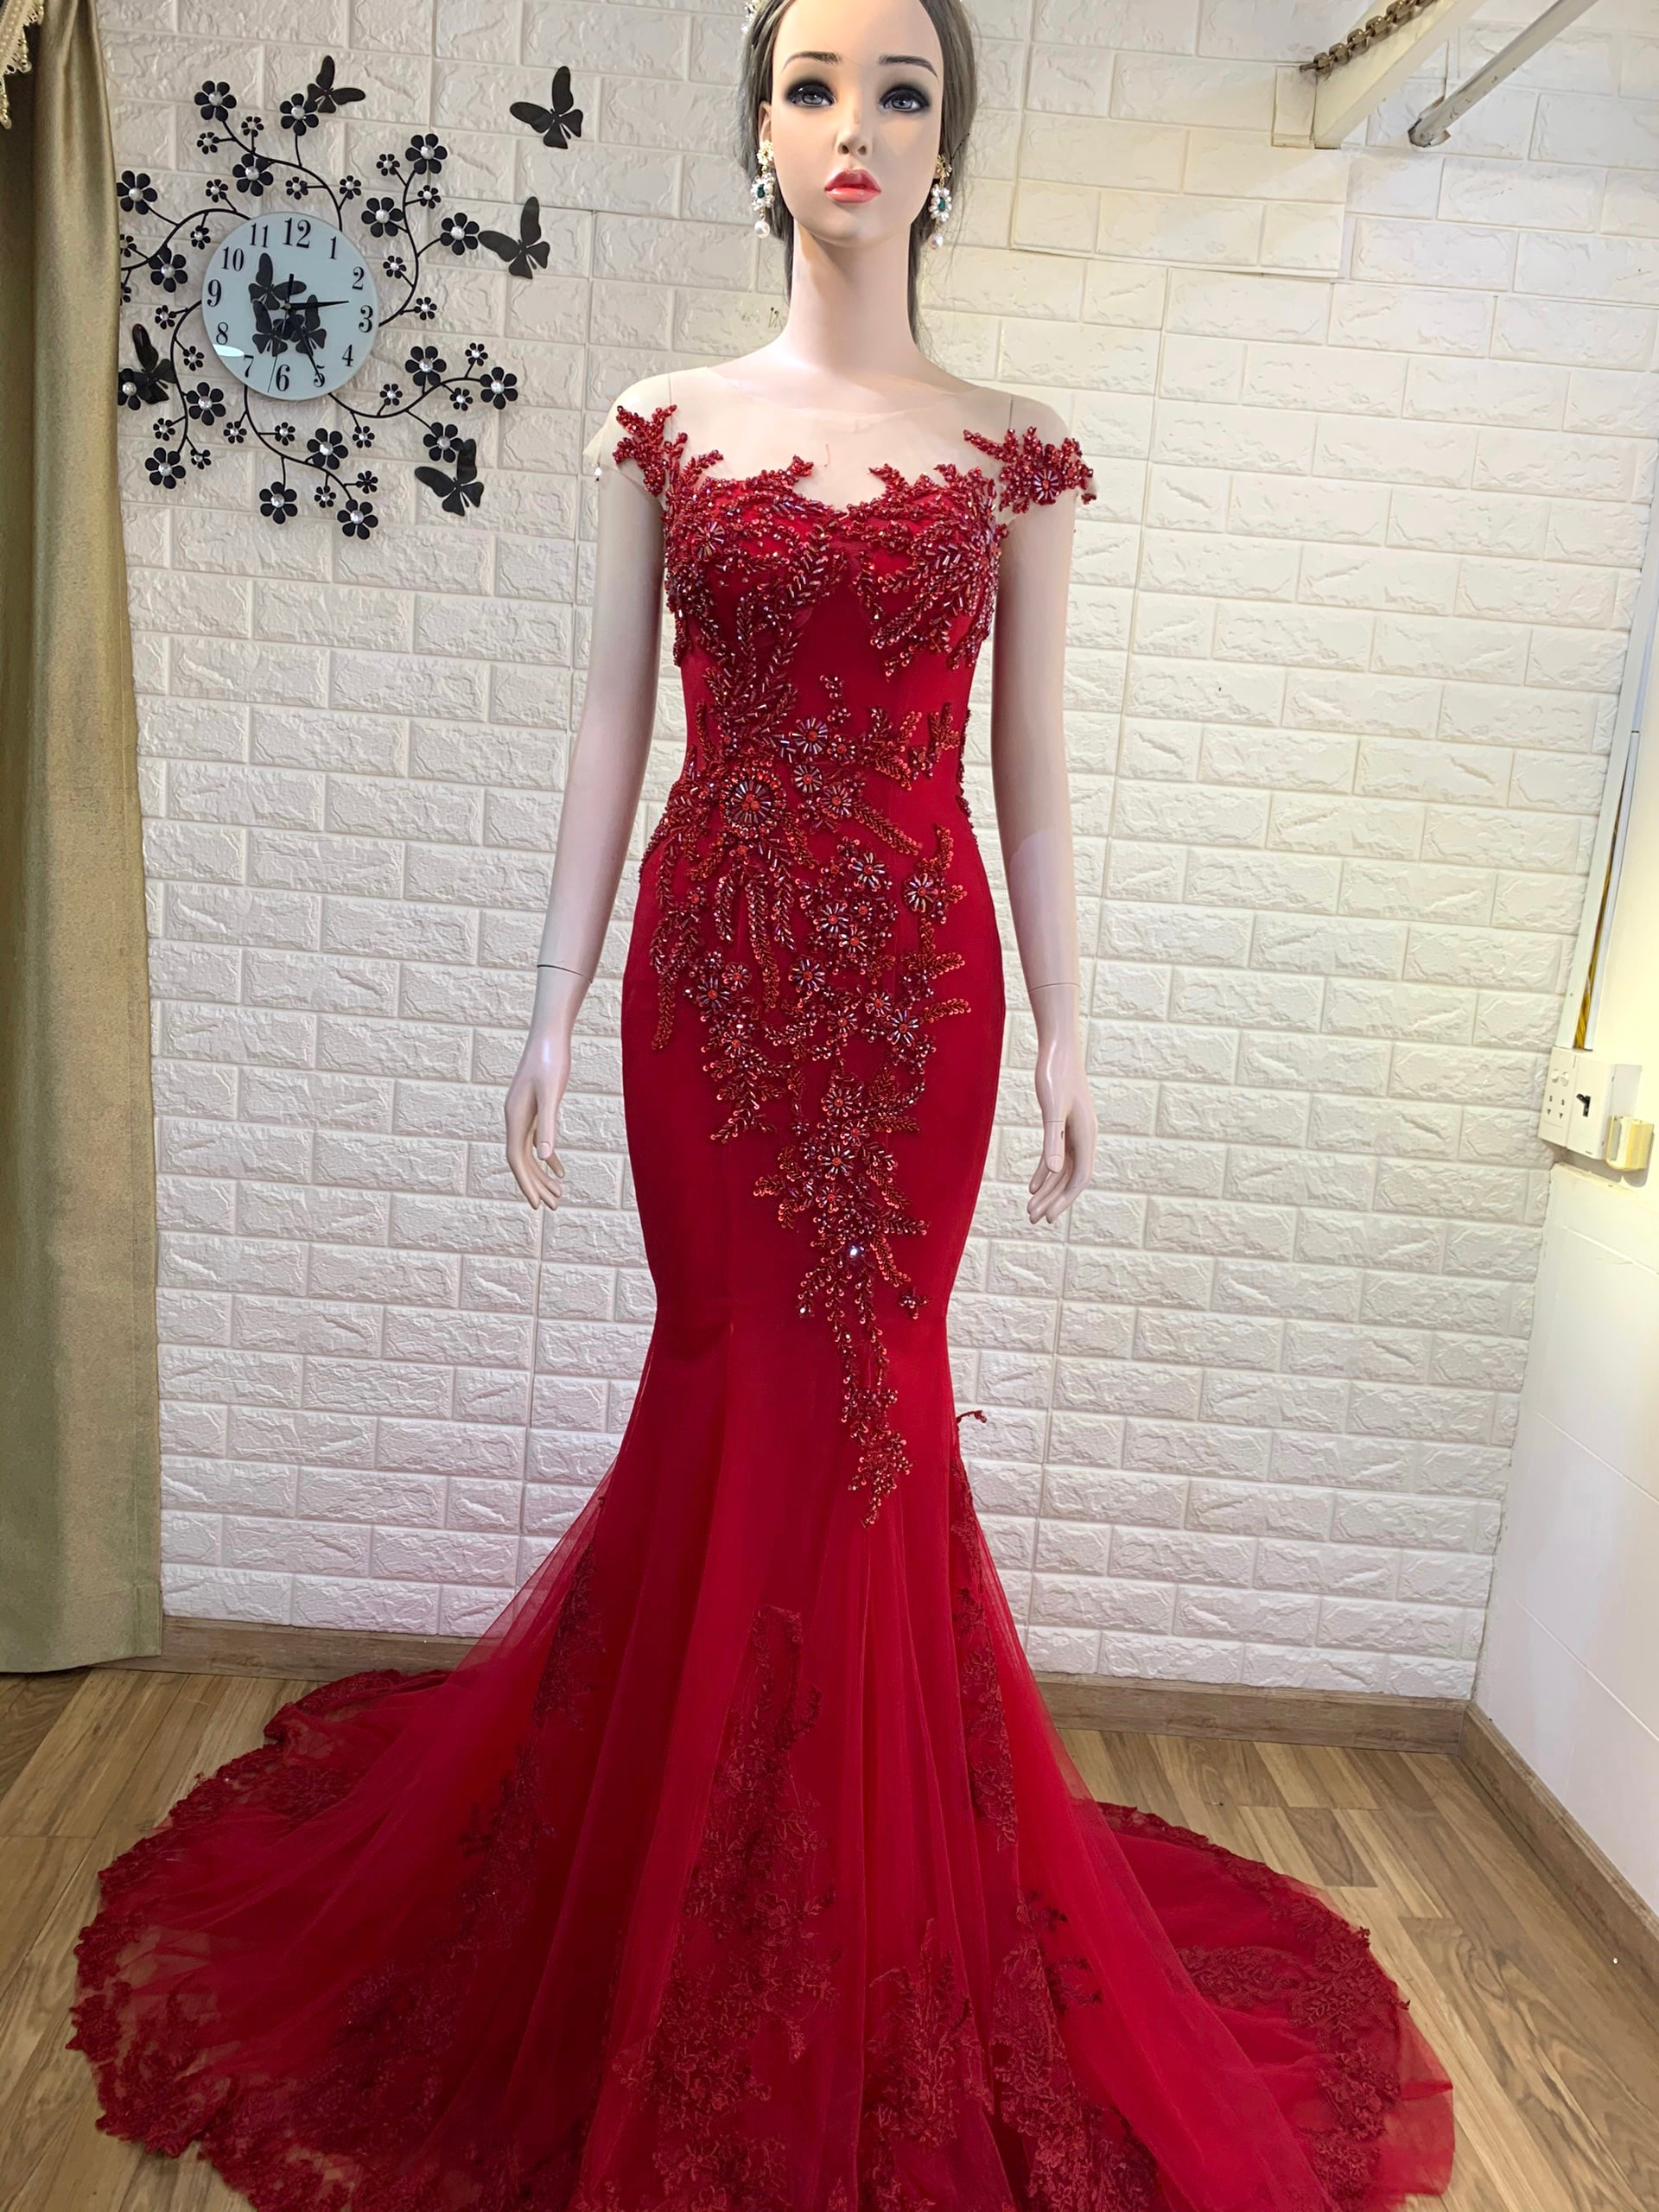 Trendy red cap sleeves beaded floral lace mermaid wedding/evening dress ...